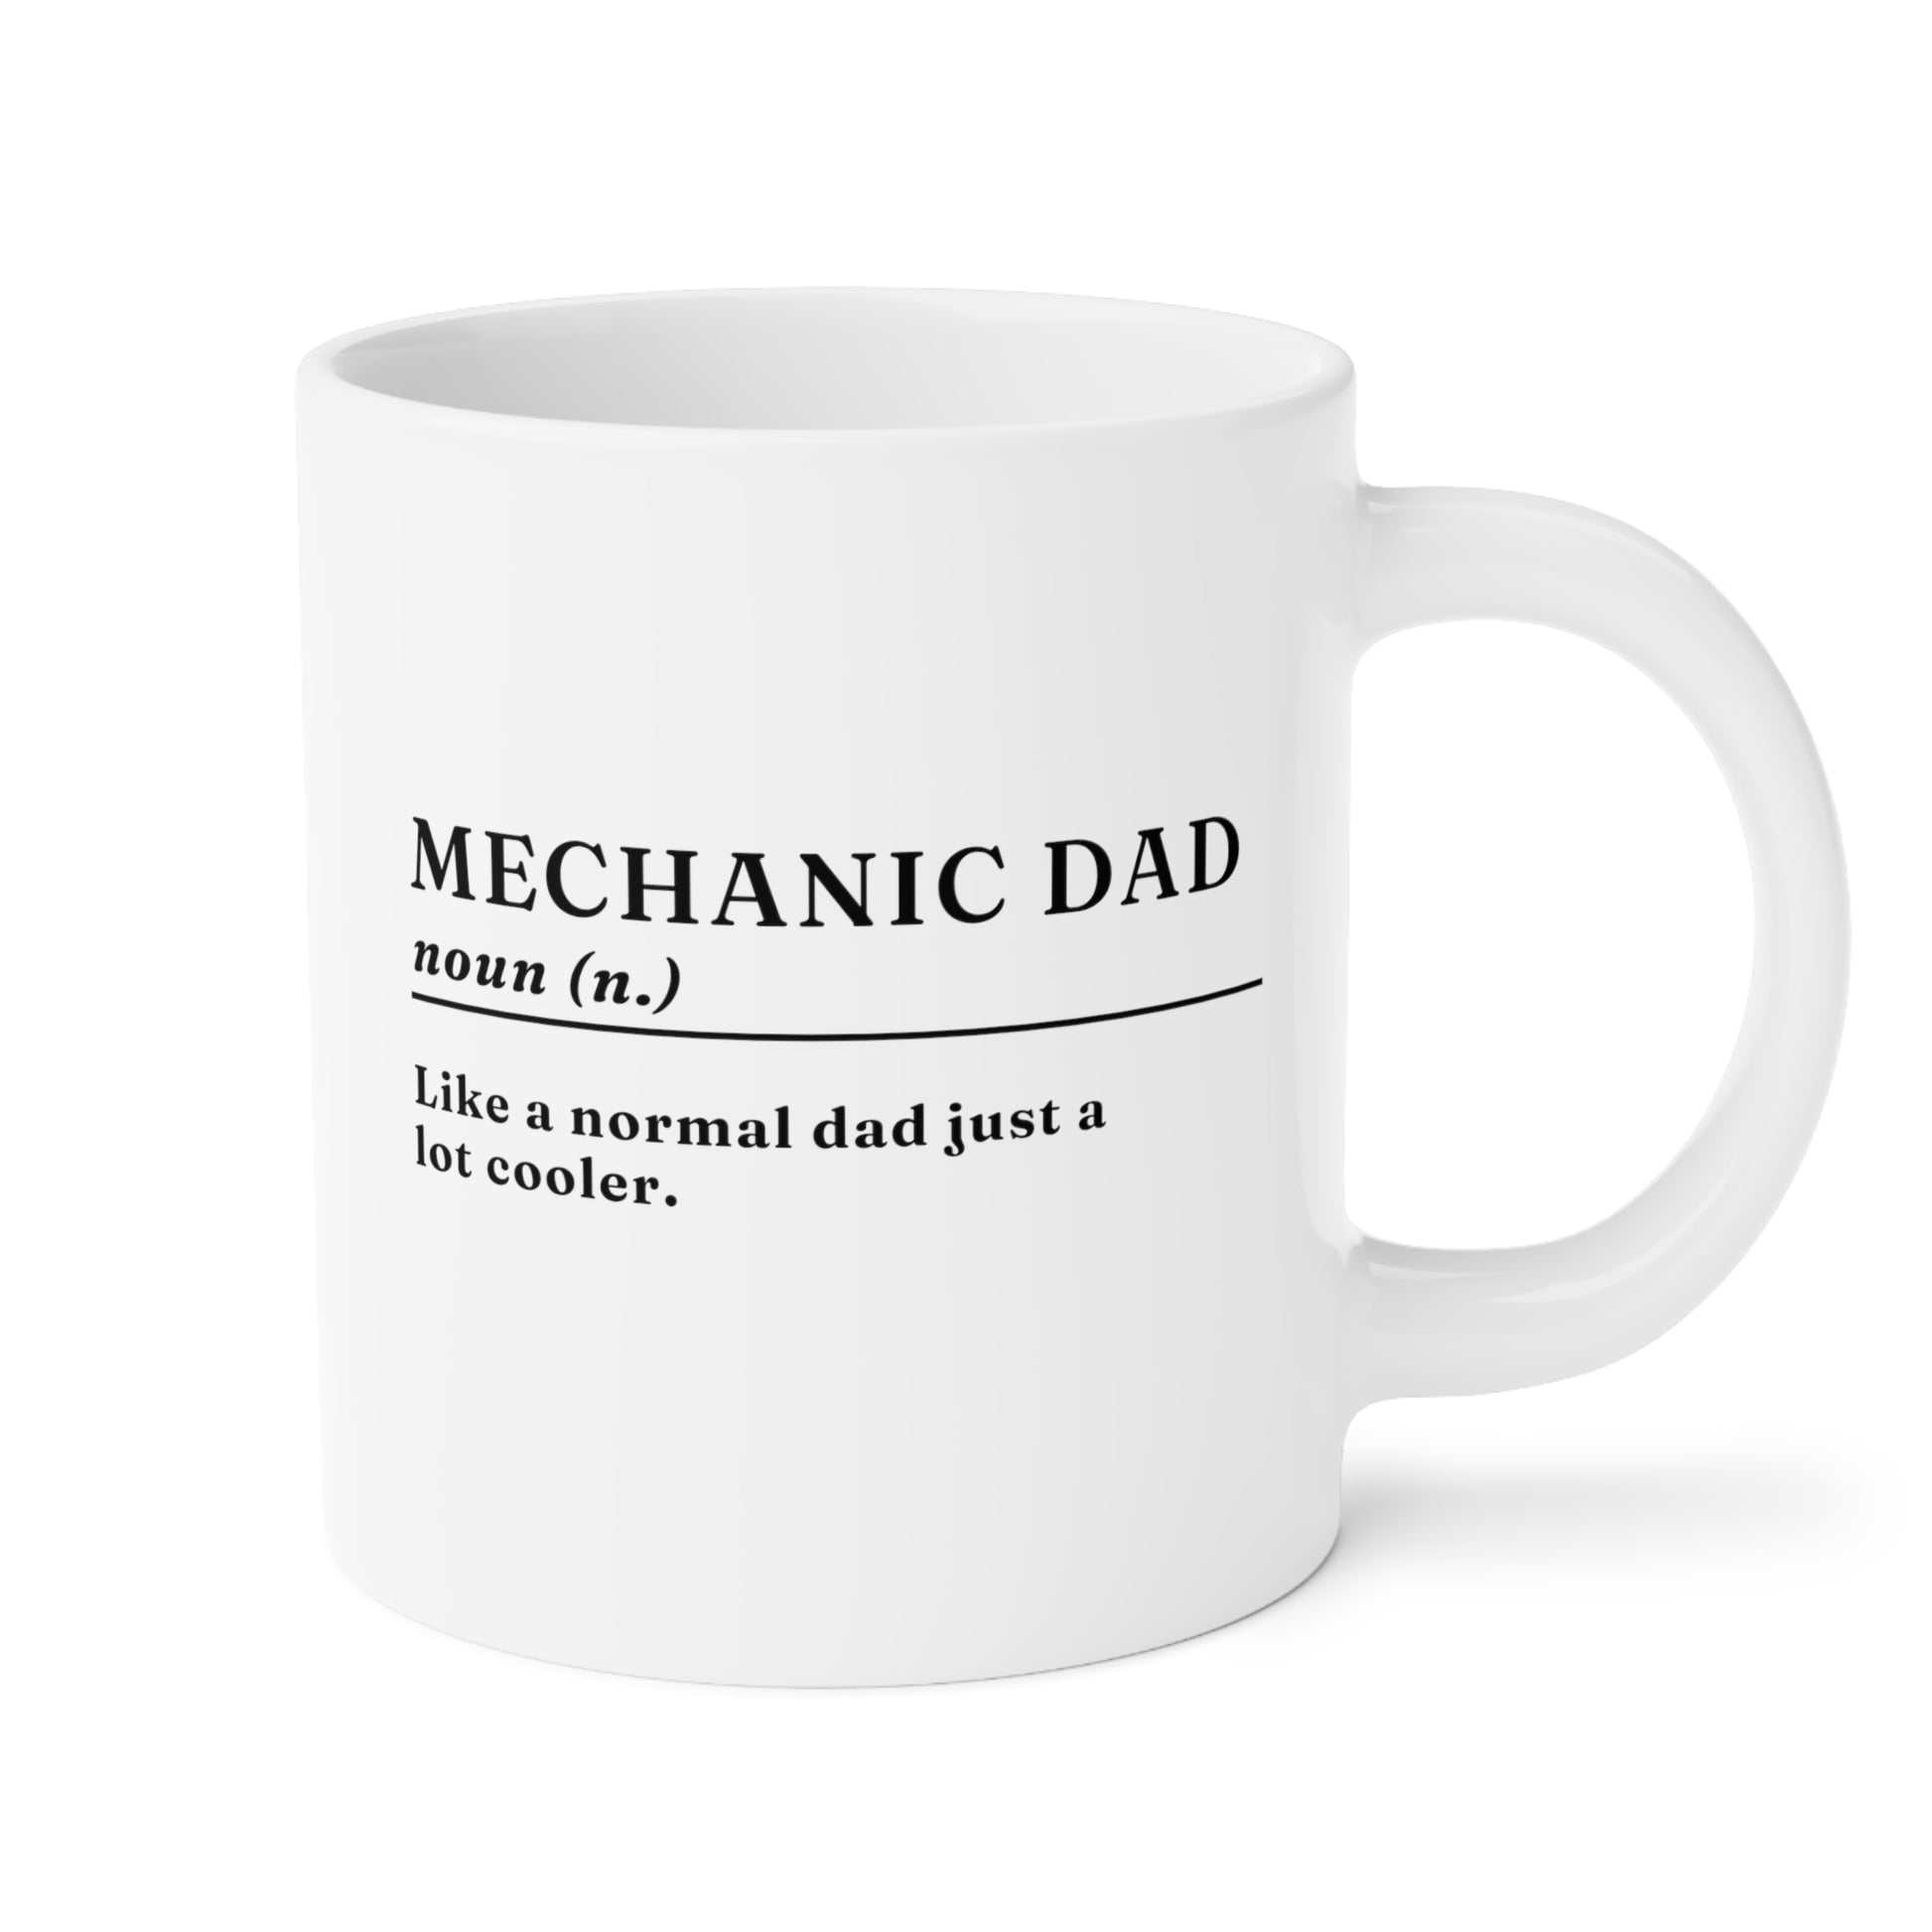 Mechanic Dad Definition 20oz white funny large coffee mug gift for dad fathers day daddy birthday anniversary waveywares wavey wares wavywares wavy wares